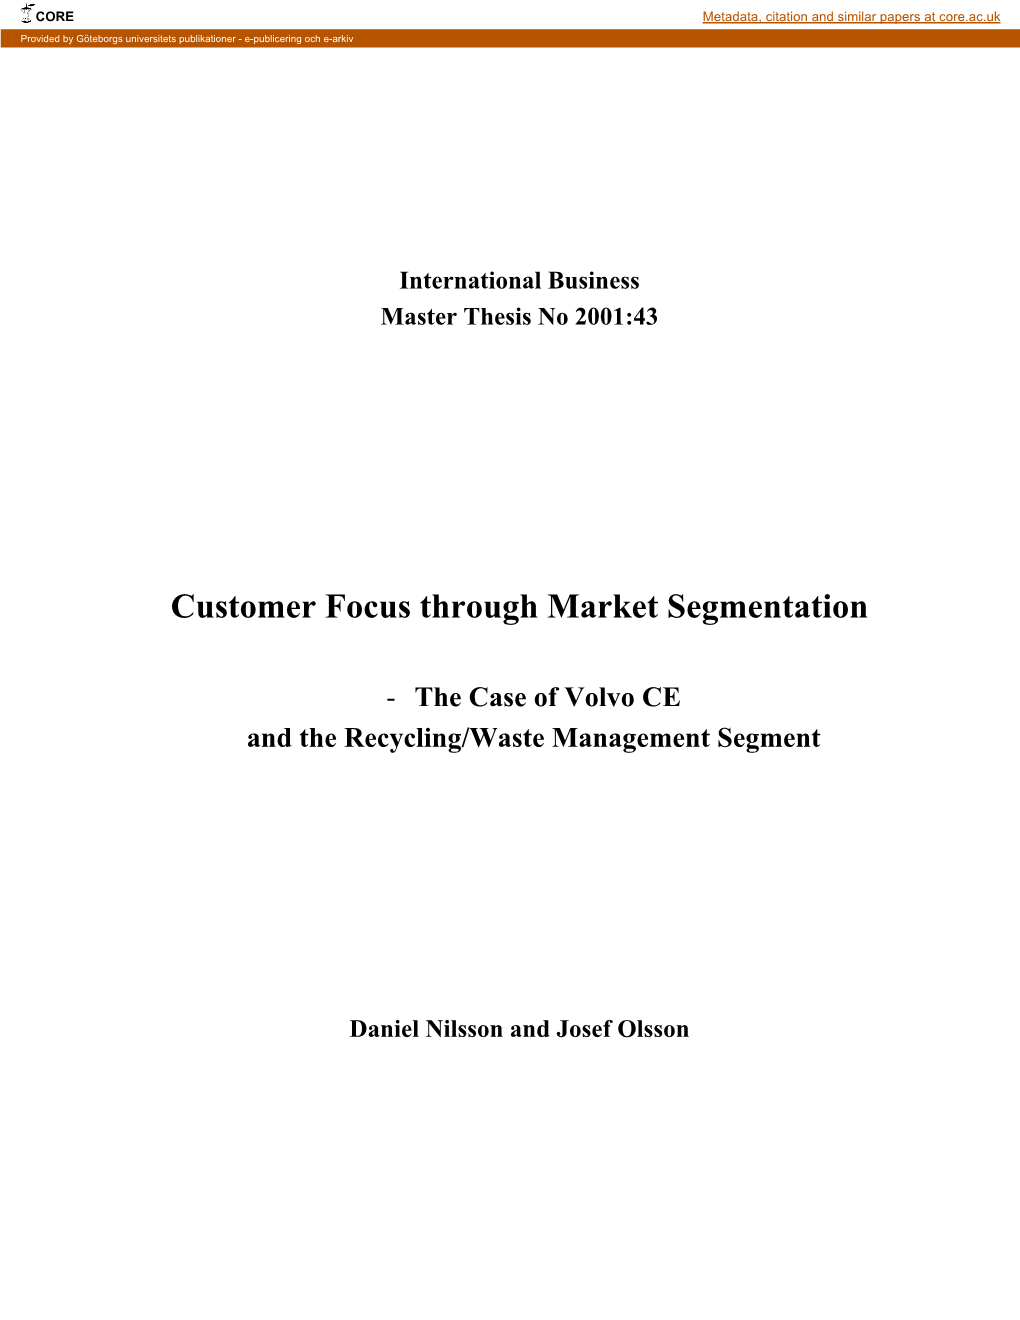 Customer Focus Through Market Segmentation